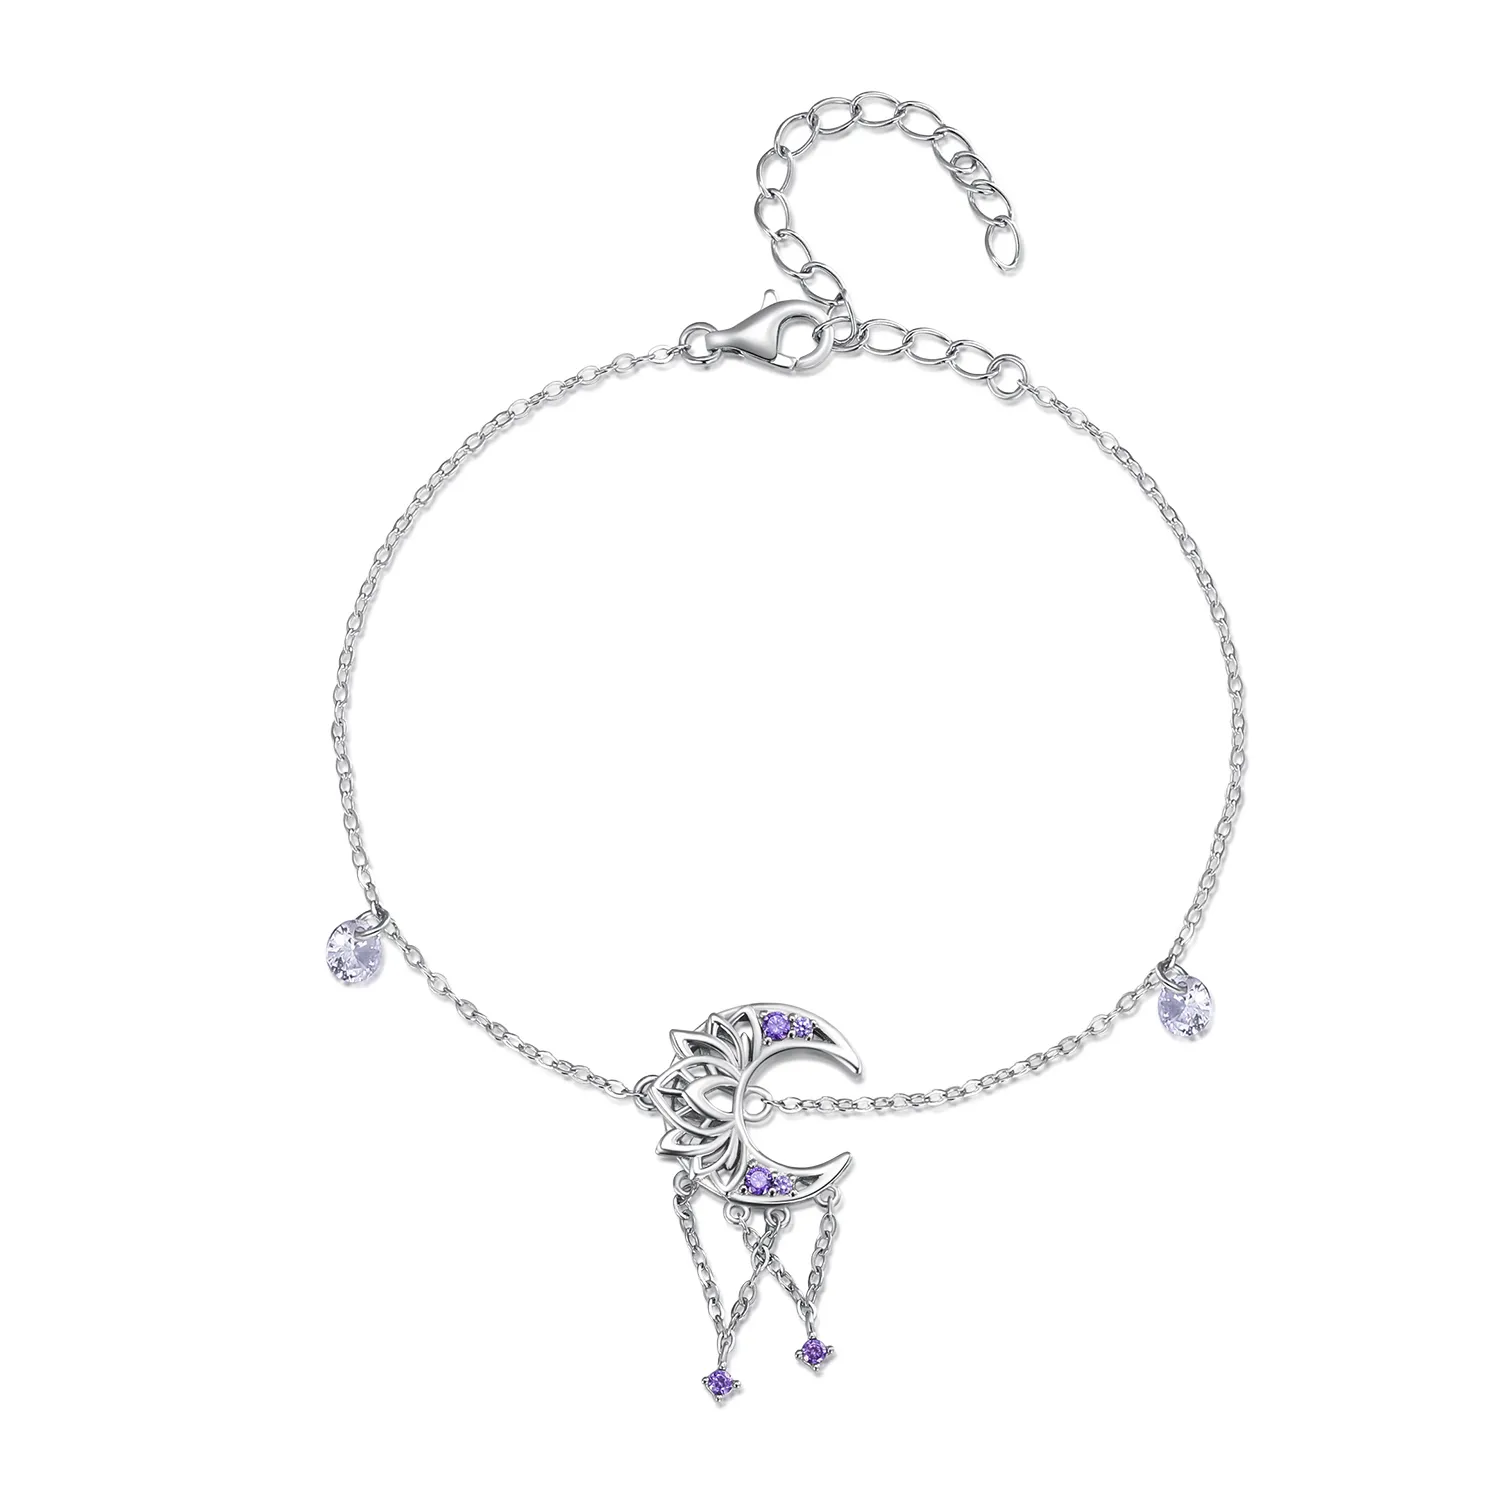 Pandora Style Moon Dream Catcher Bracelet - BSB125